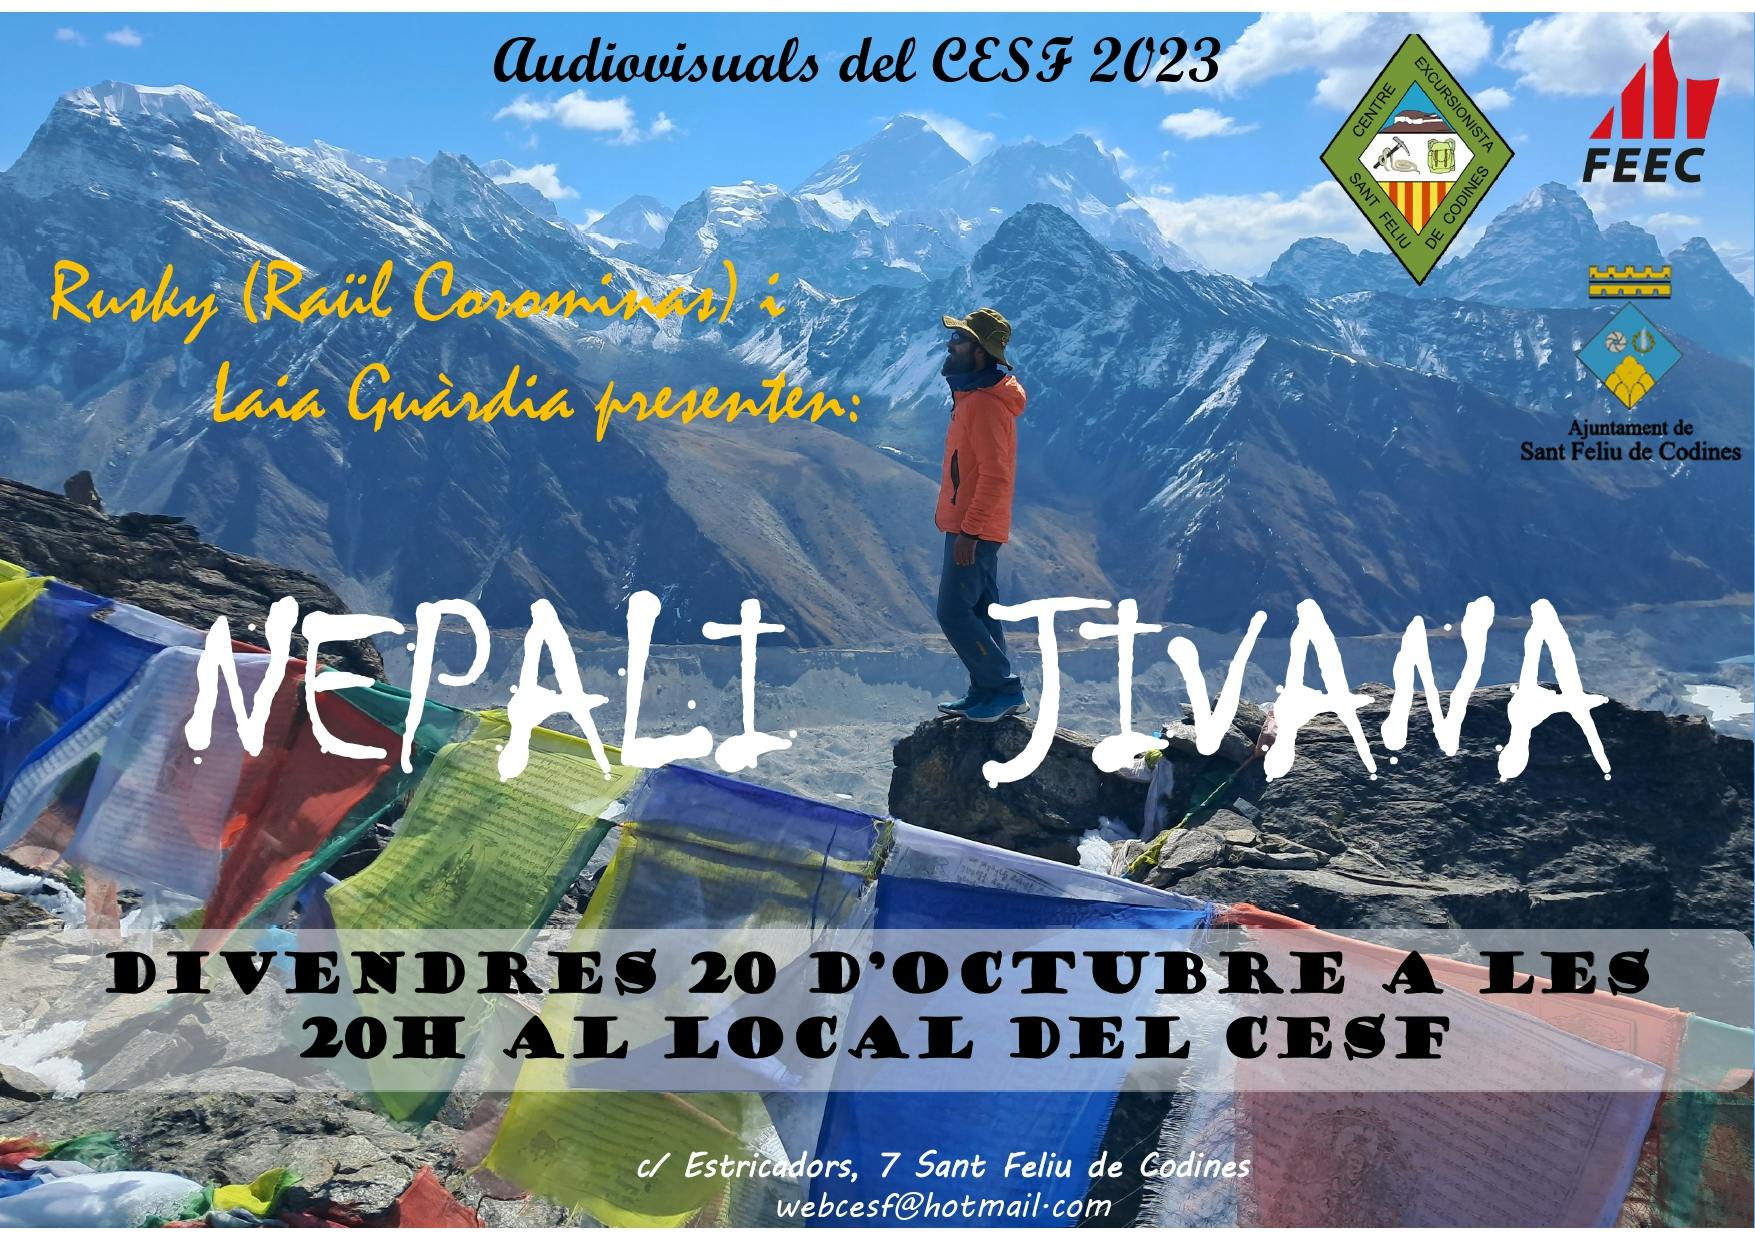 Audiovisual del CESF "Nepali Jivana"